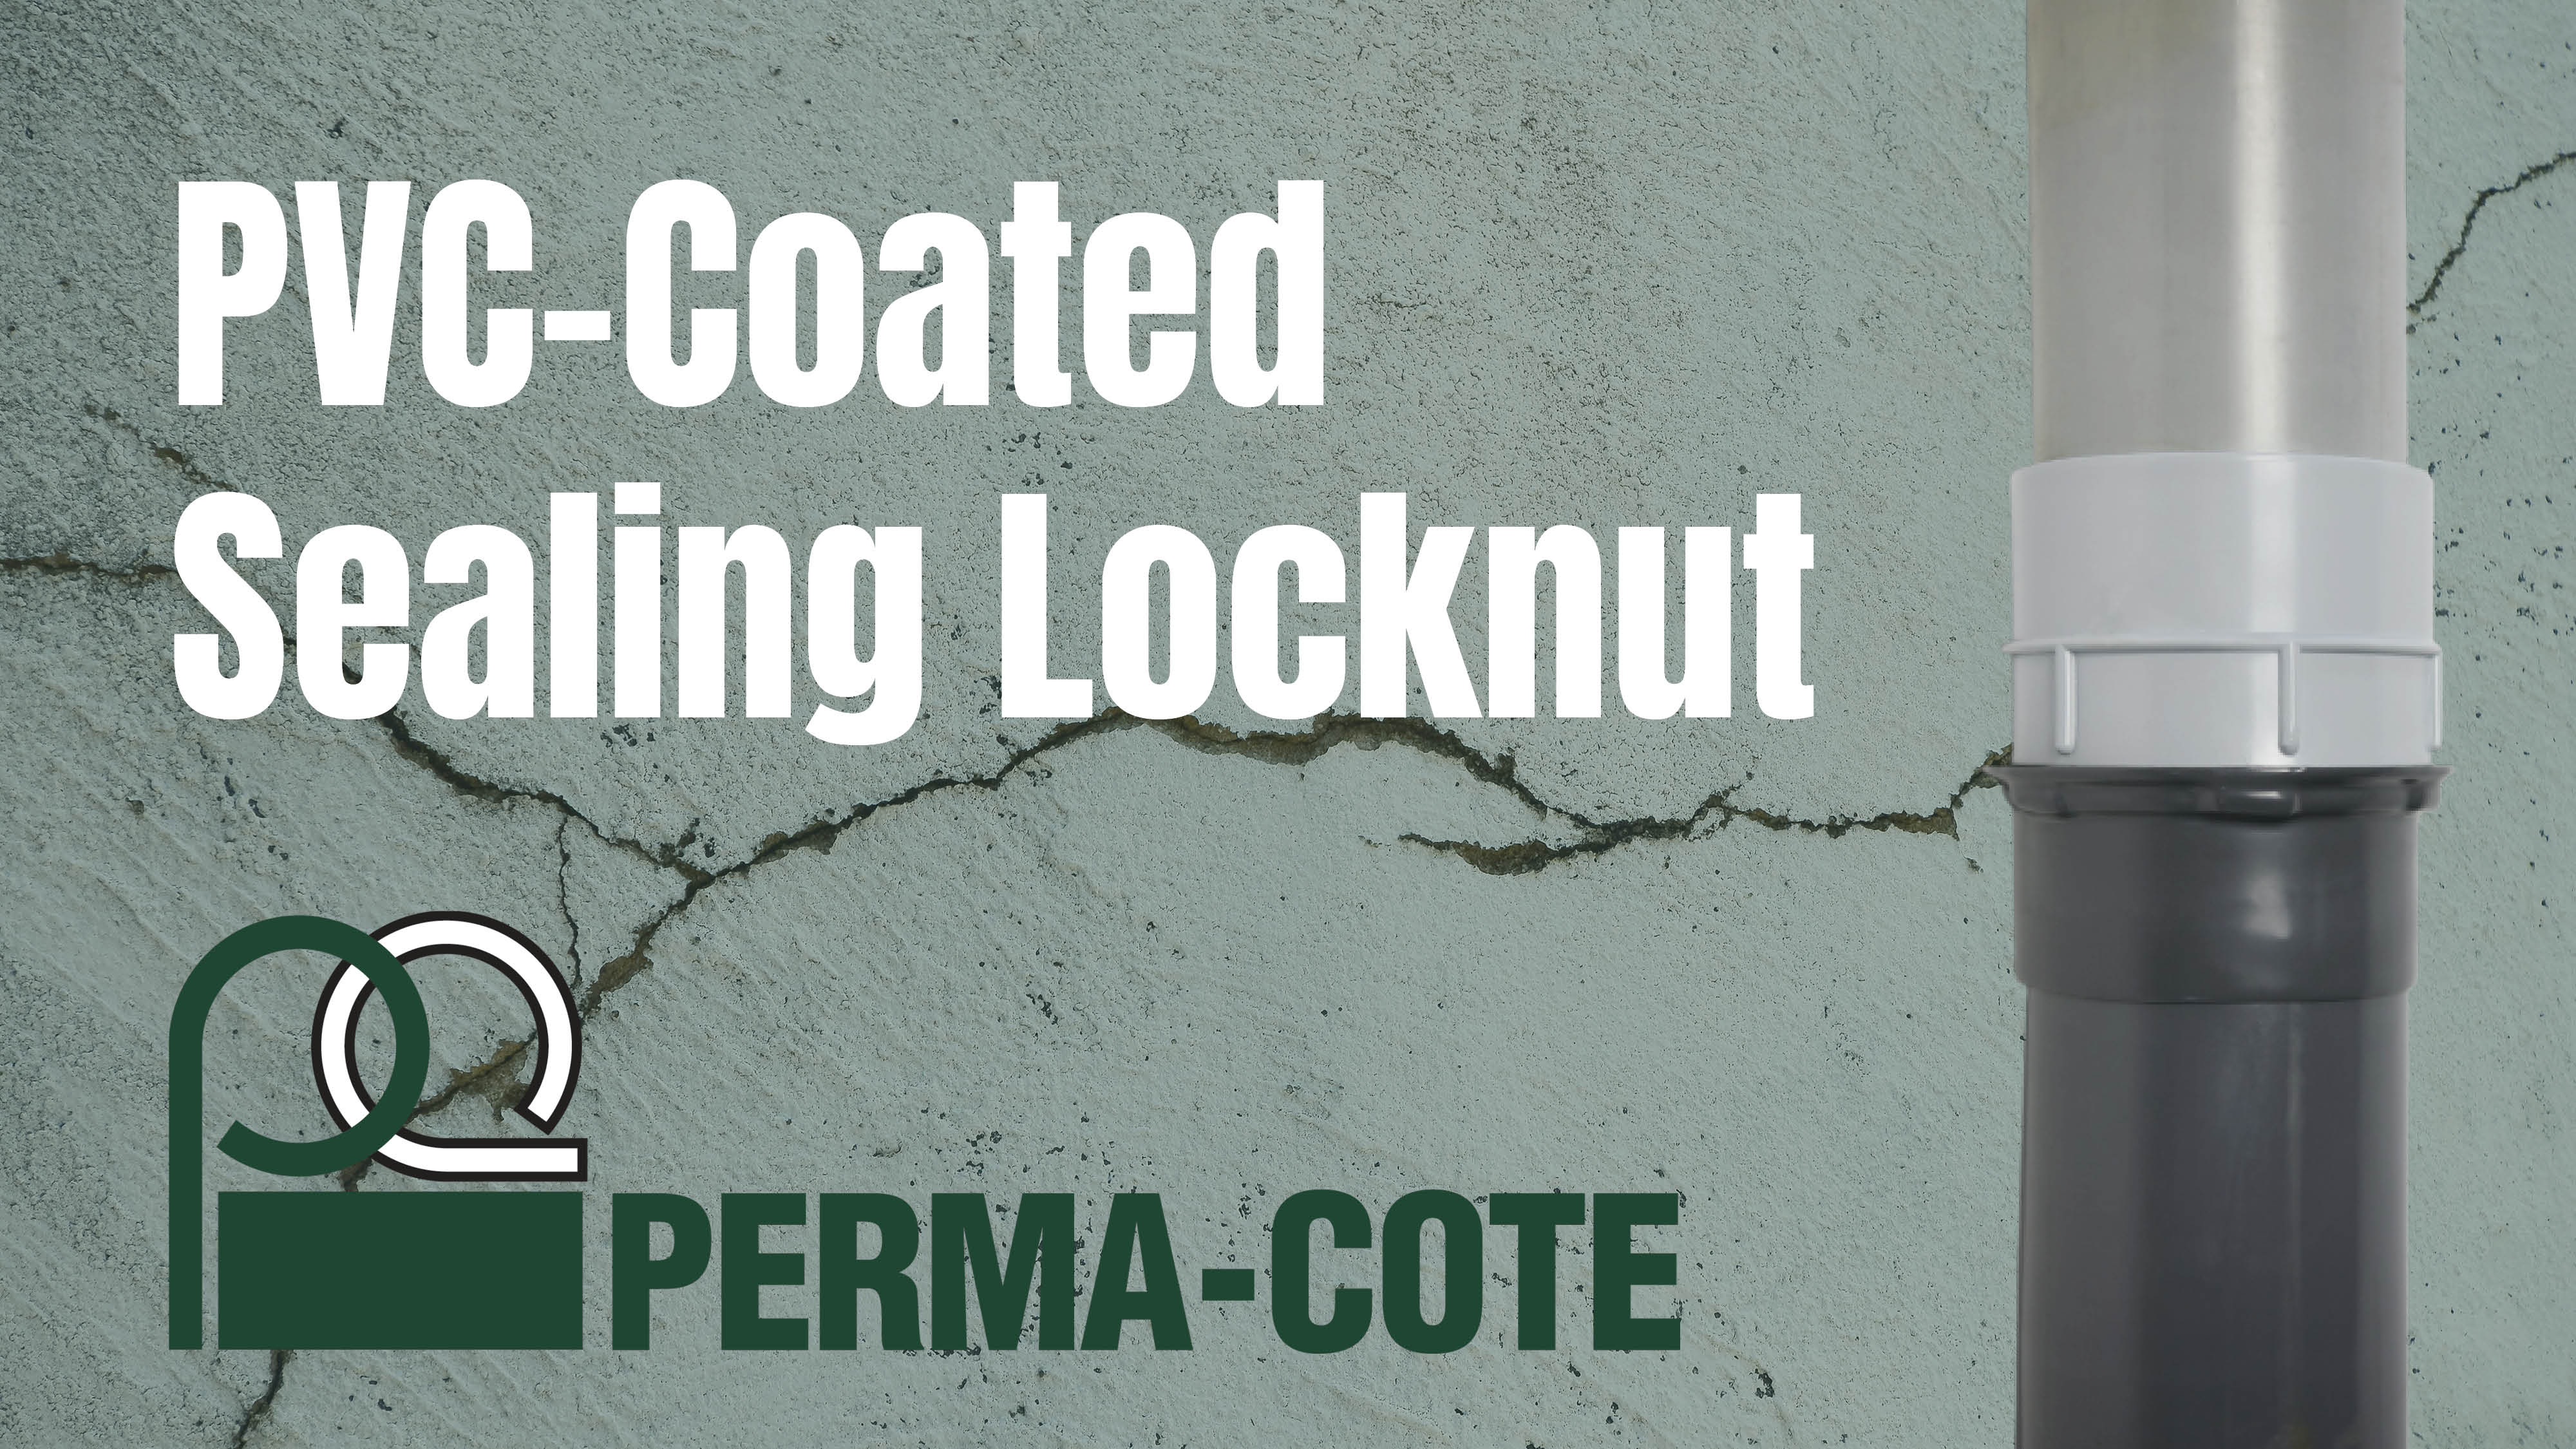 PVC-Coated Sealing Locknut Video